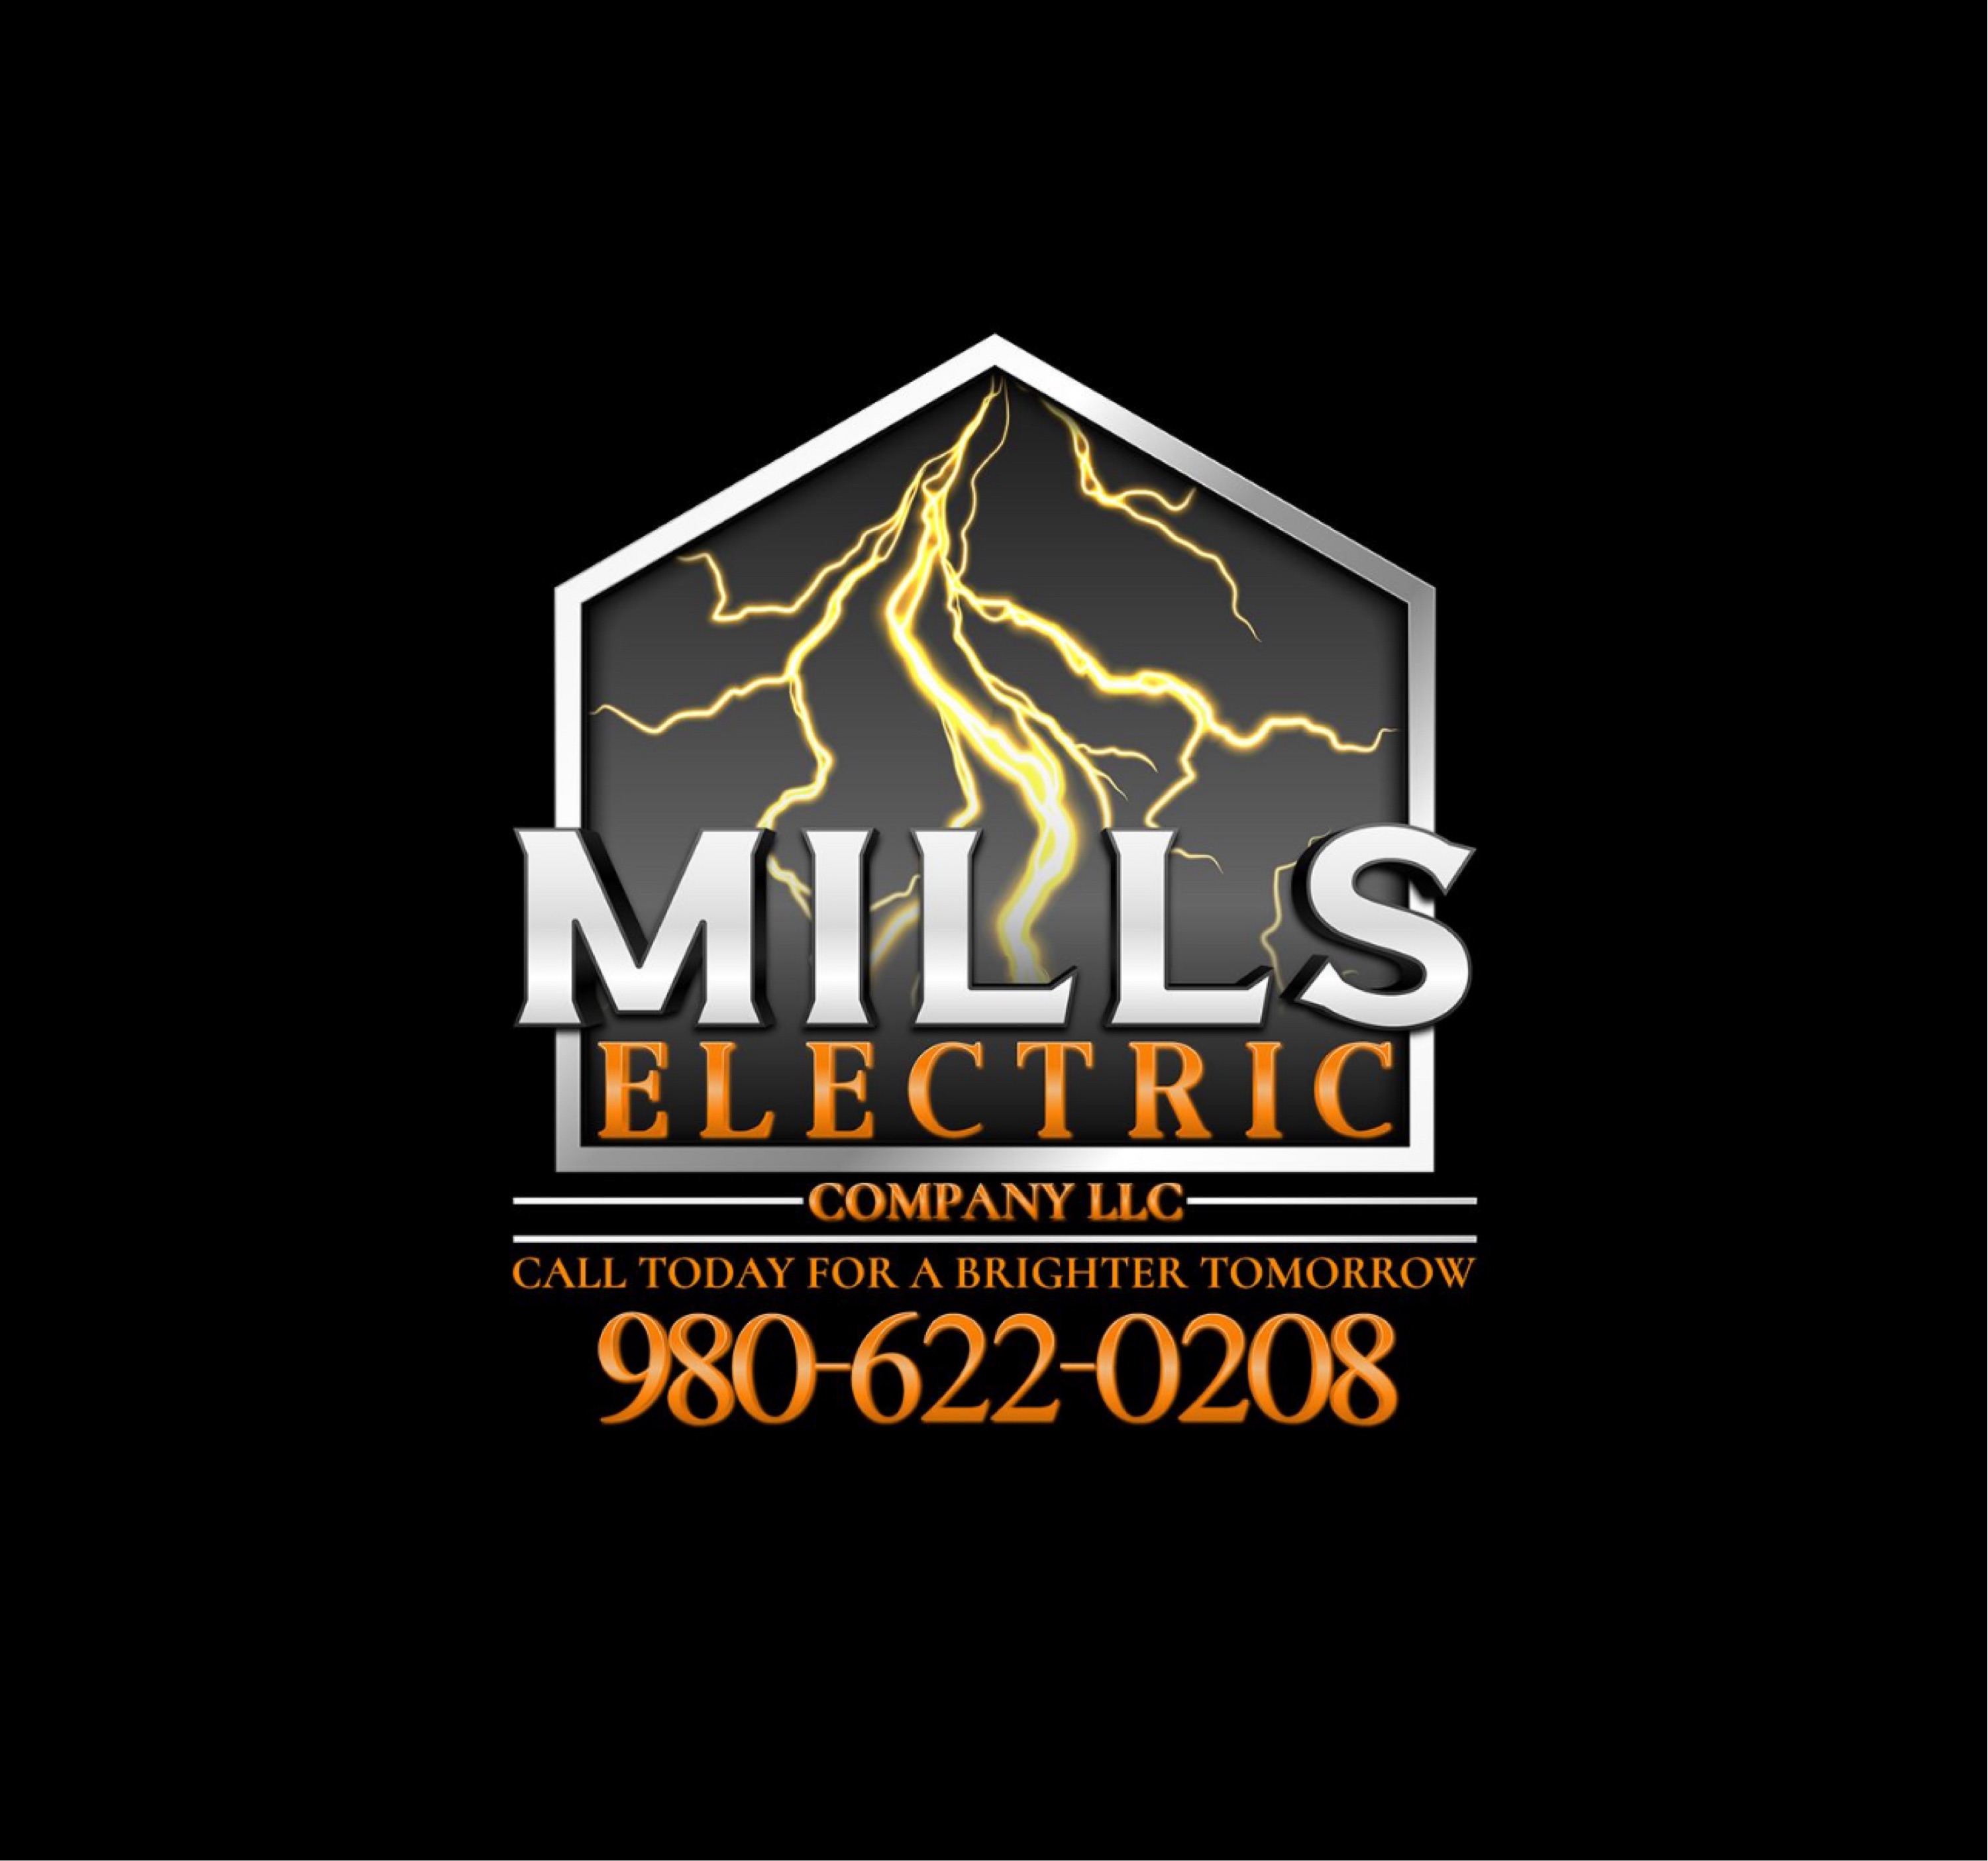 Mills Electric Company LLC Logo